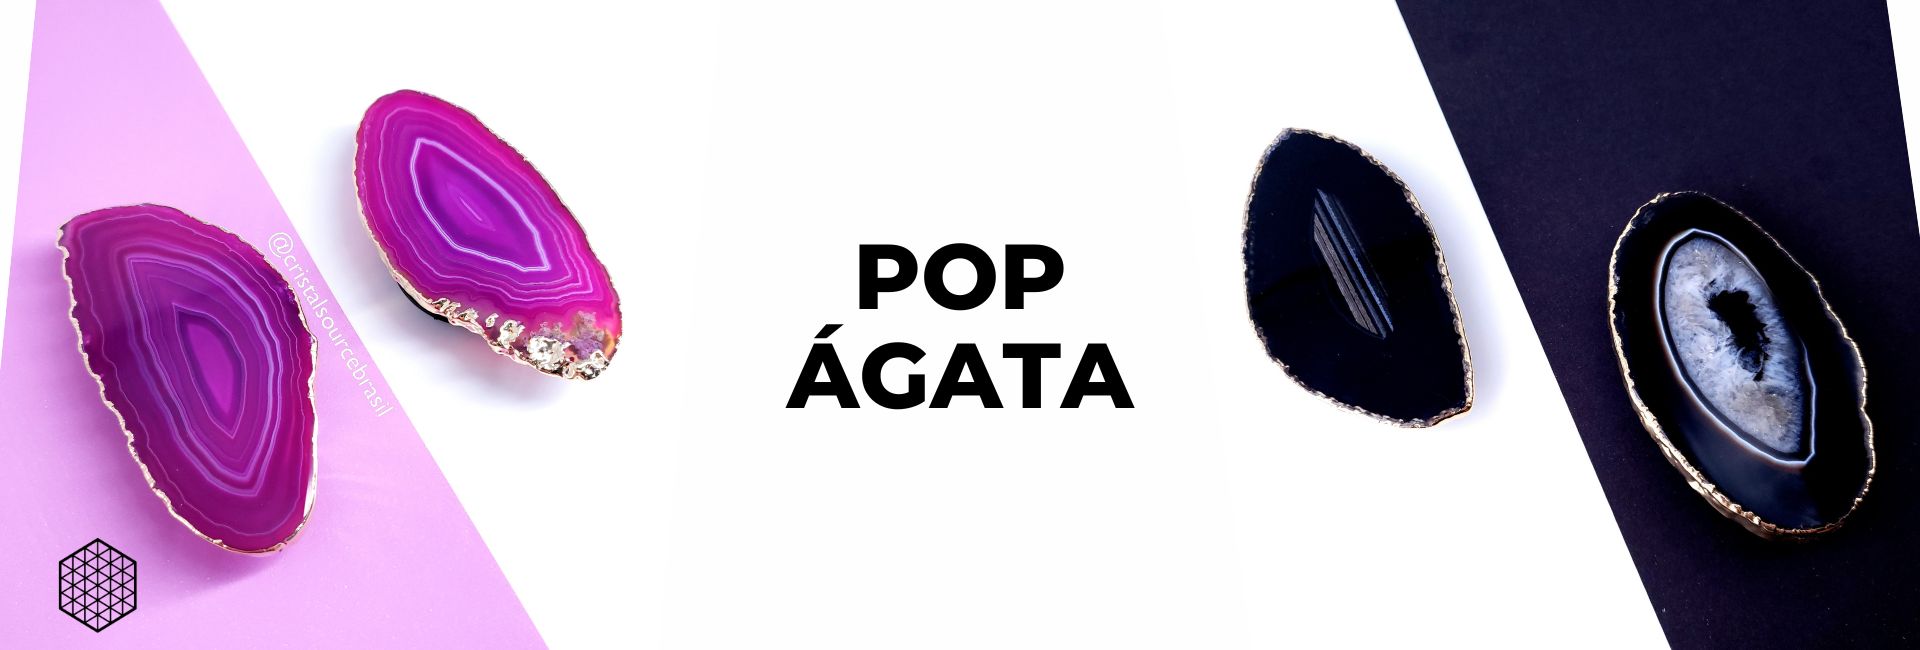 POP ÁGATA CATEGORIA